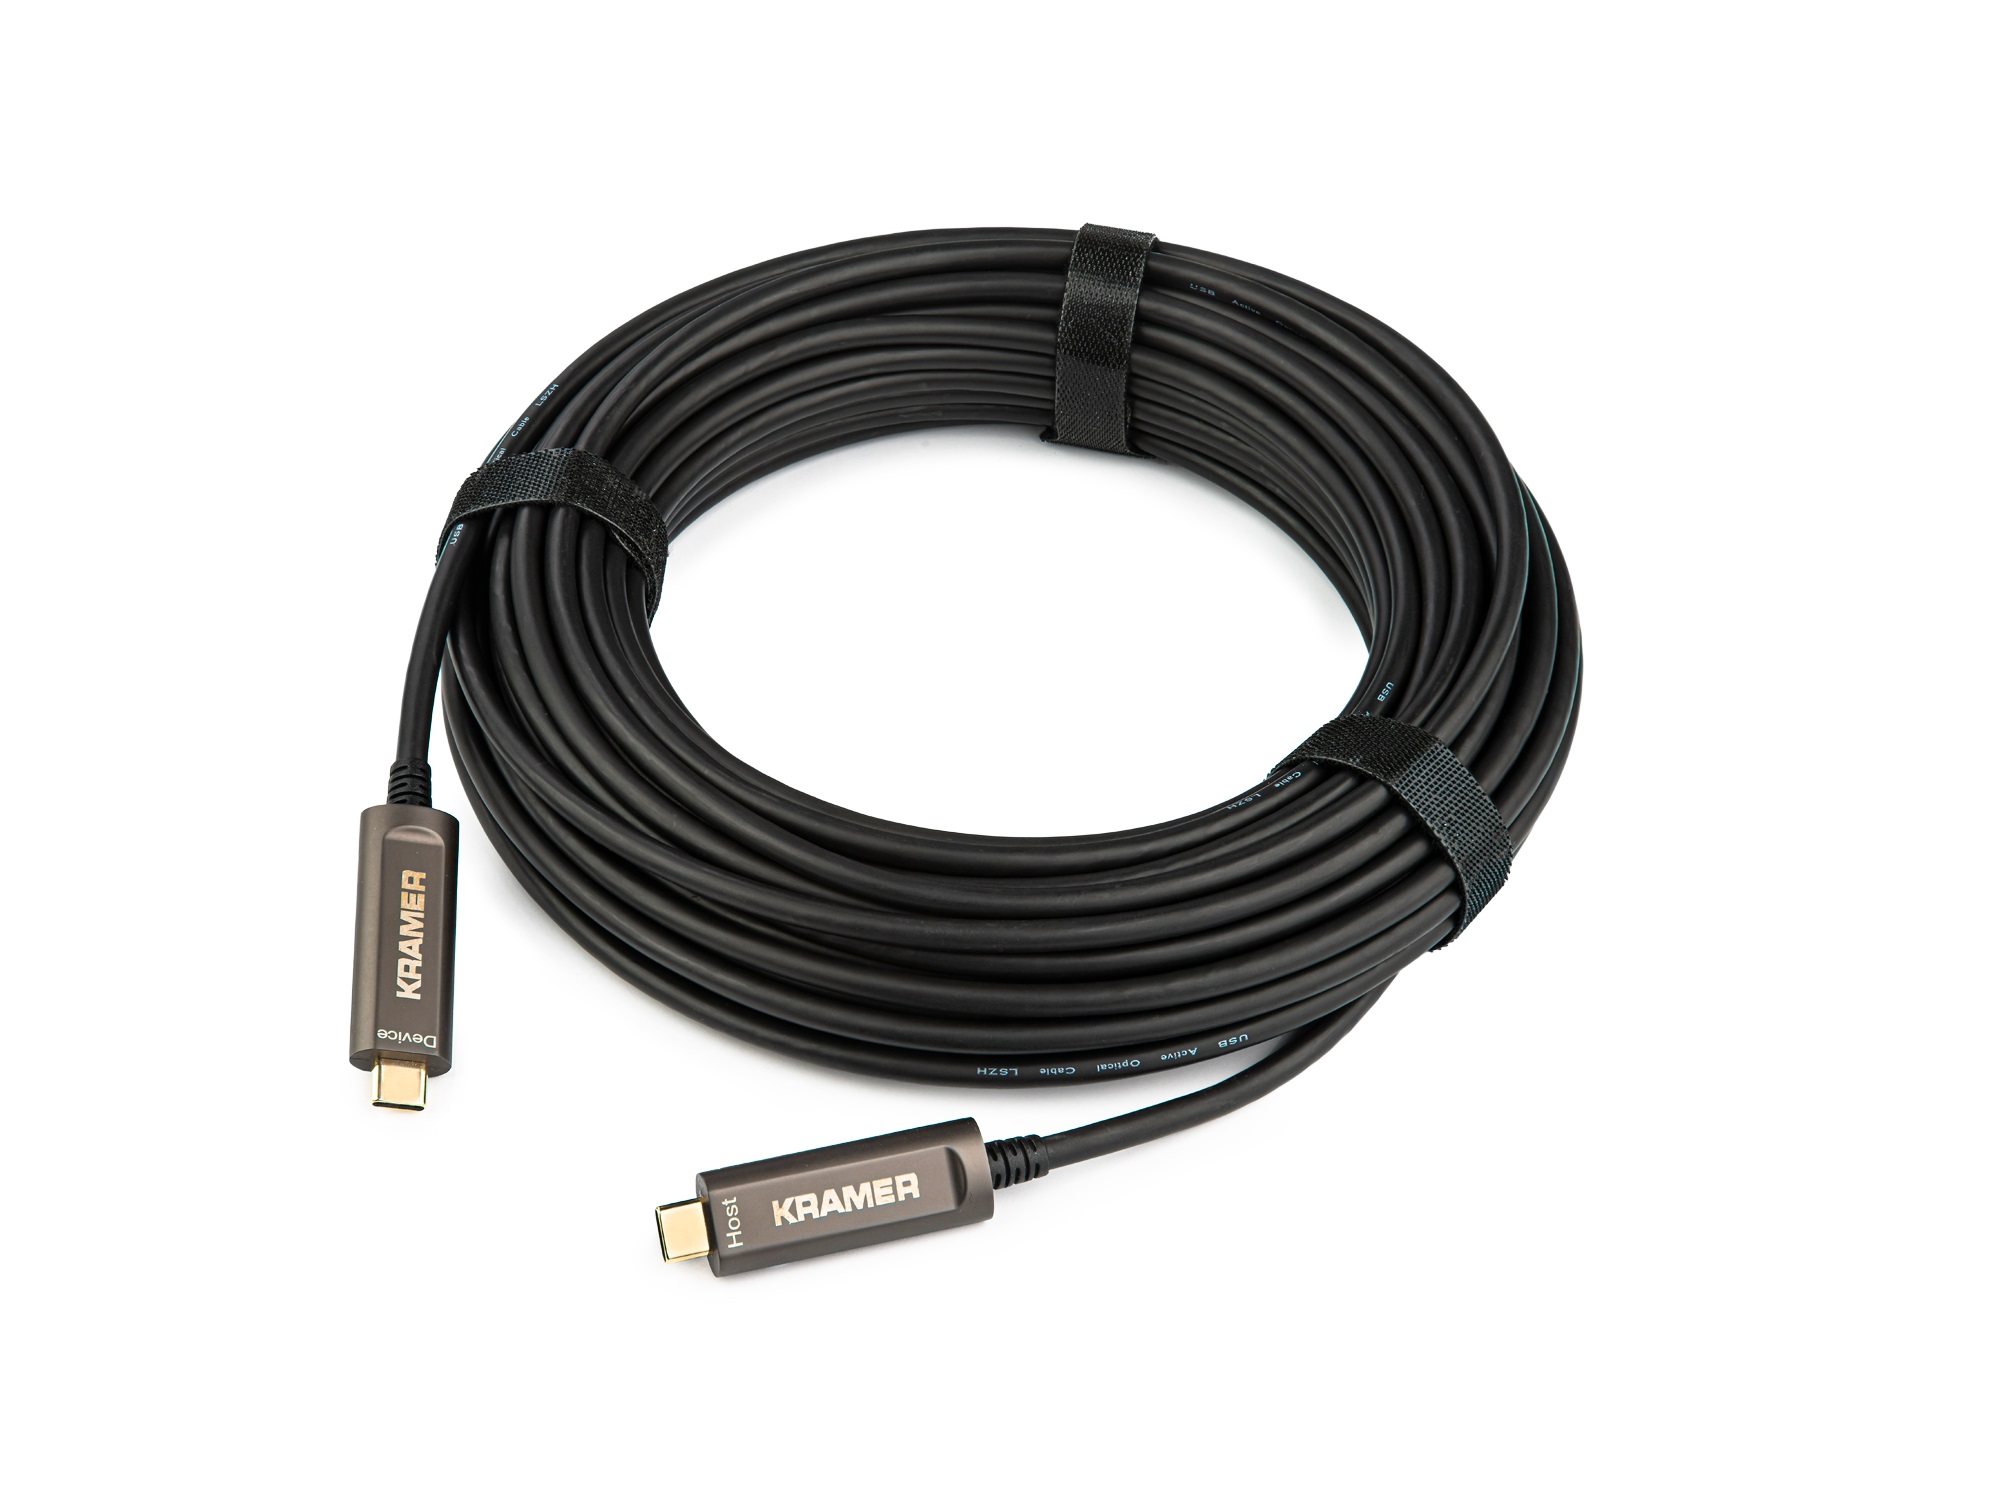 CLS-AOCU31/CC-10 3m (10ft) USB 3.1 GEN 2 Optical USB-C Cable by Kramer